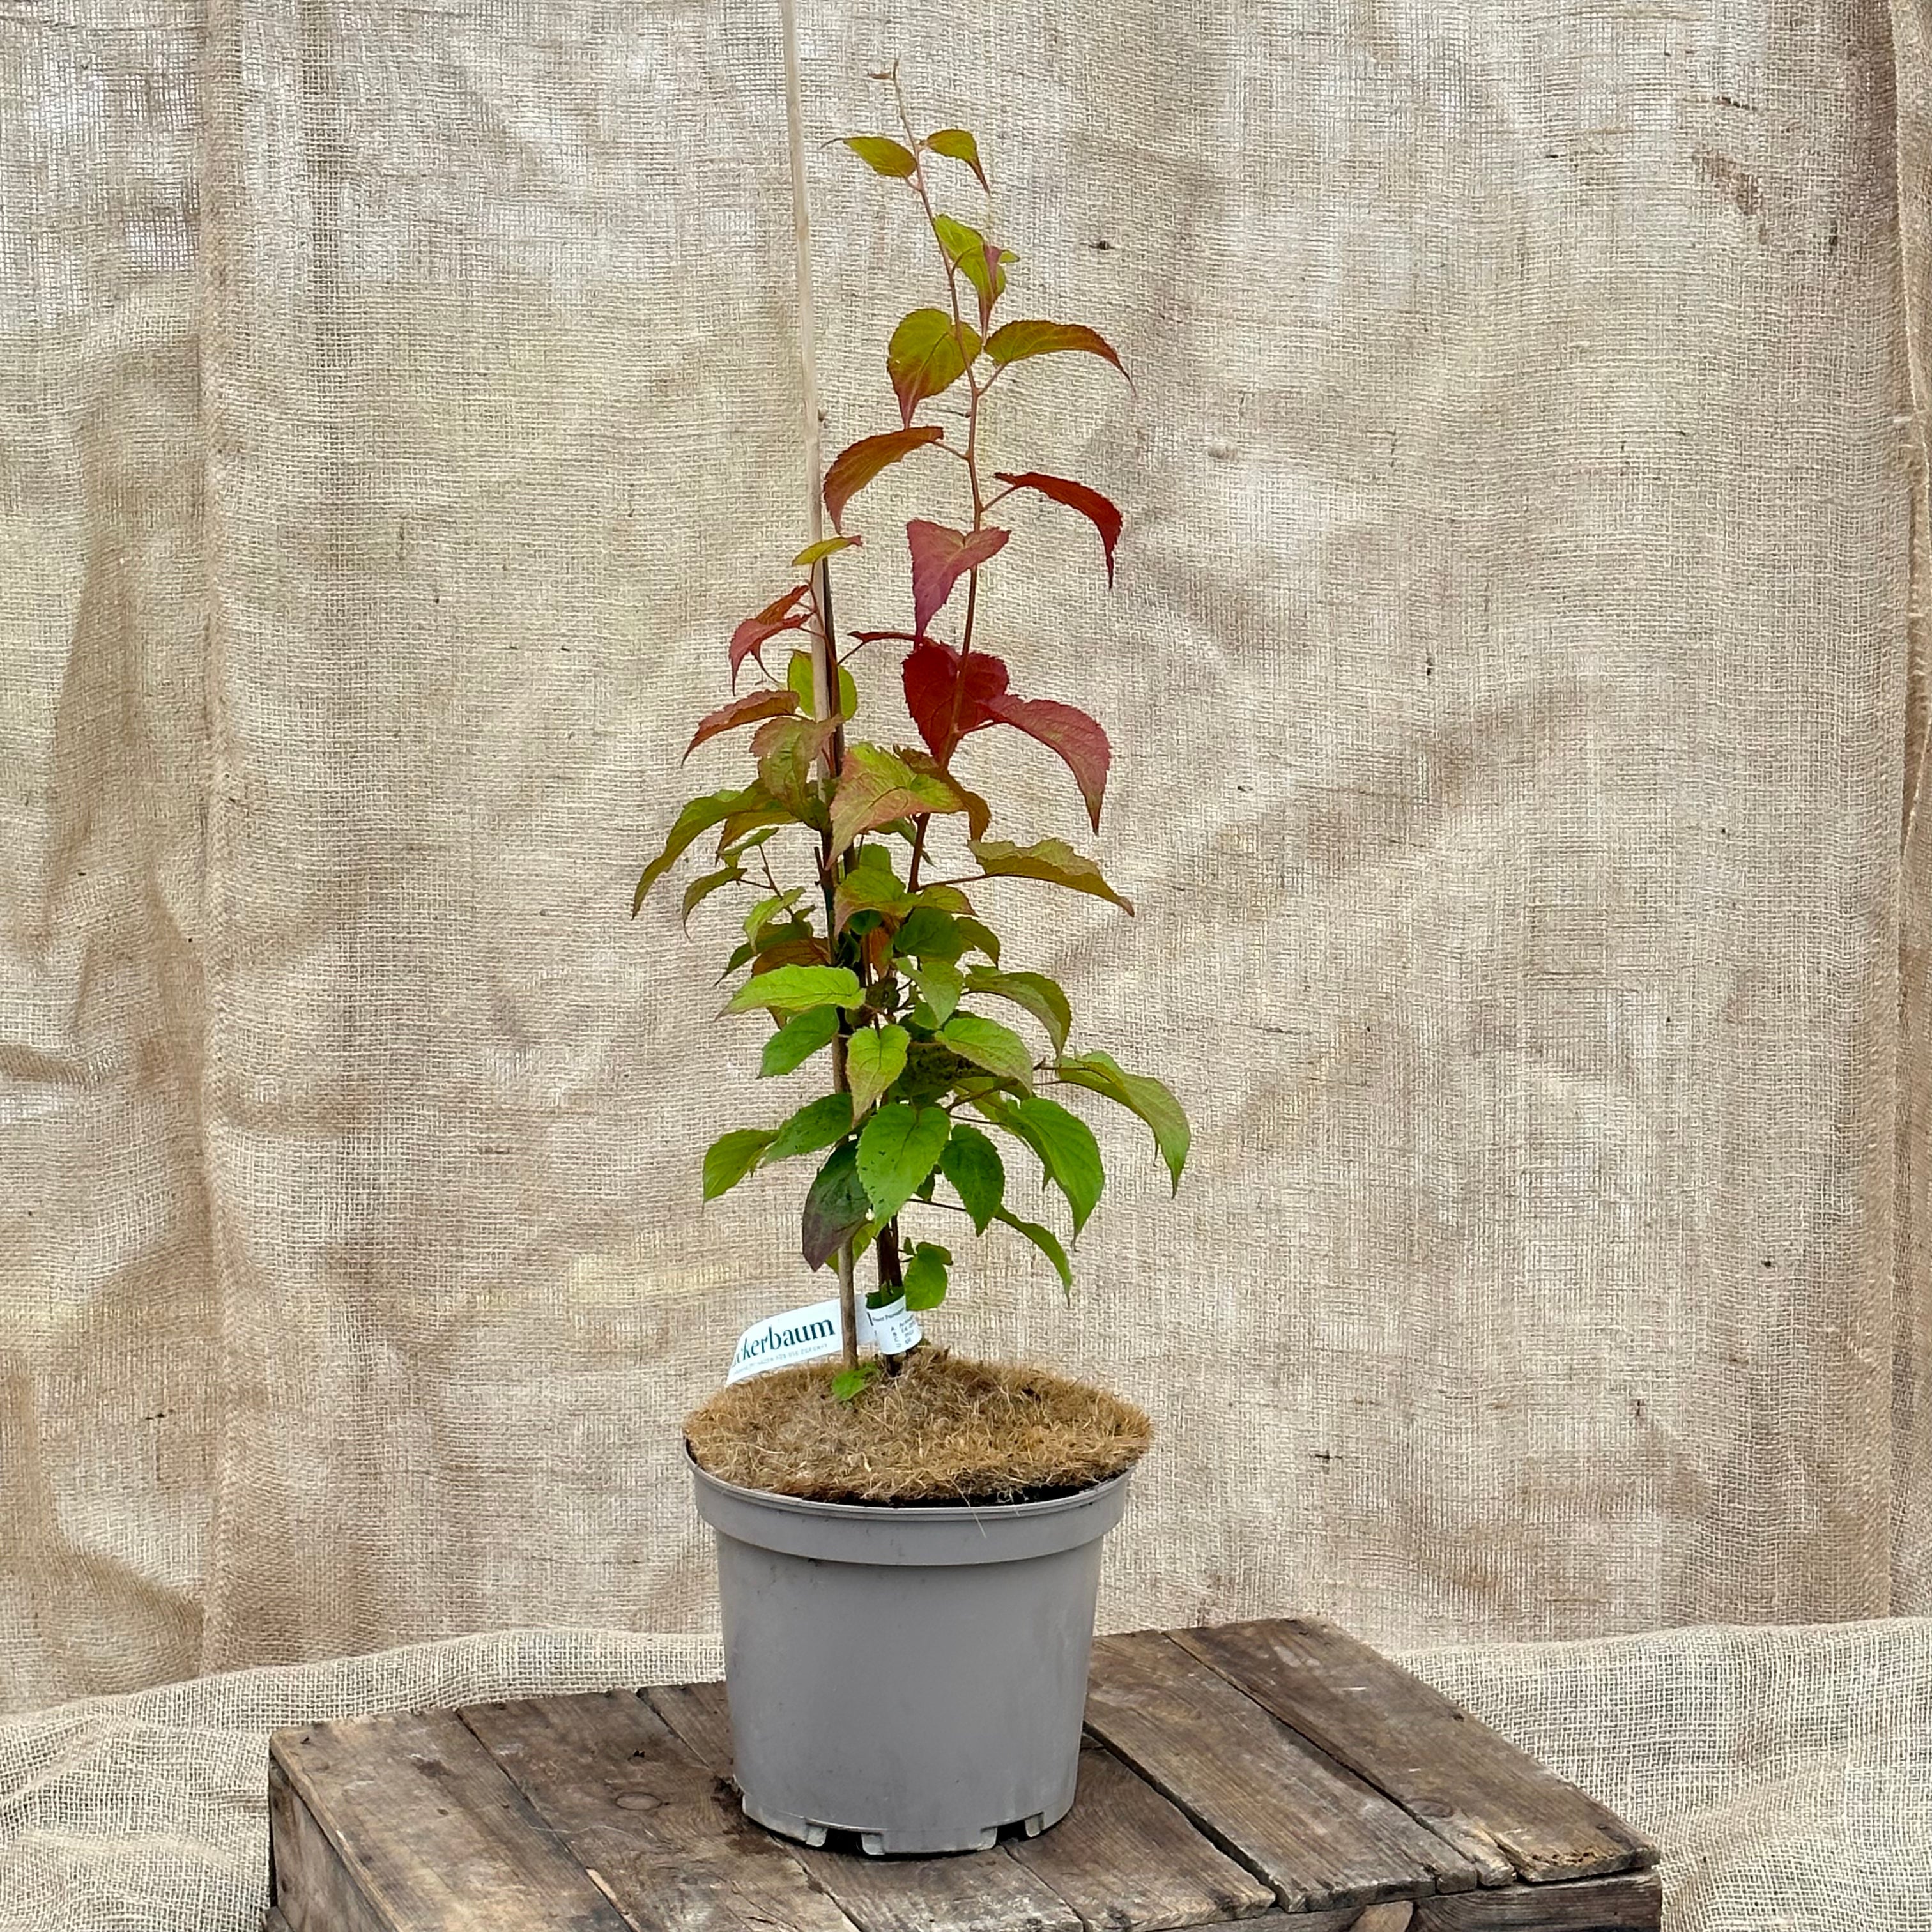 ackerbaum Sibirische Kiwi Pflanze - Dr. Szymanowski kaufen